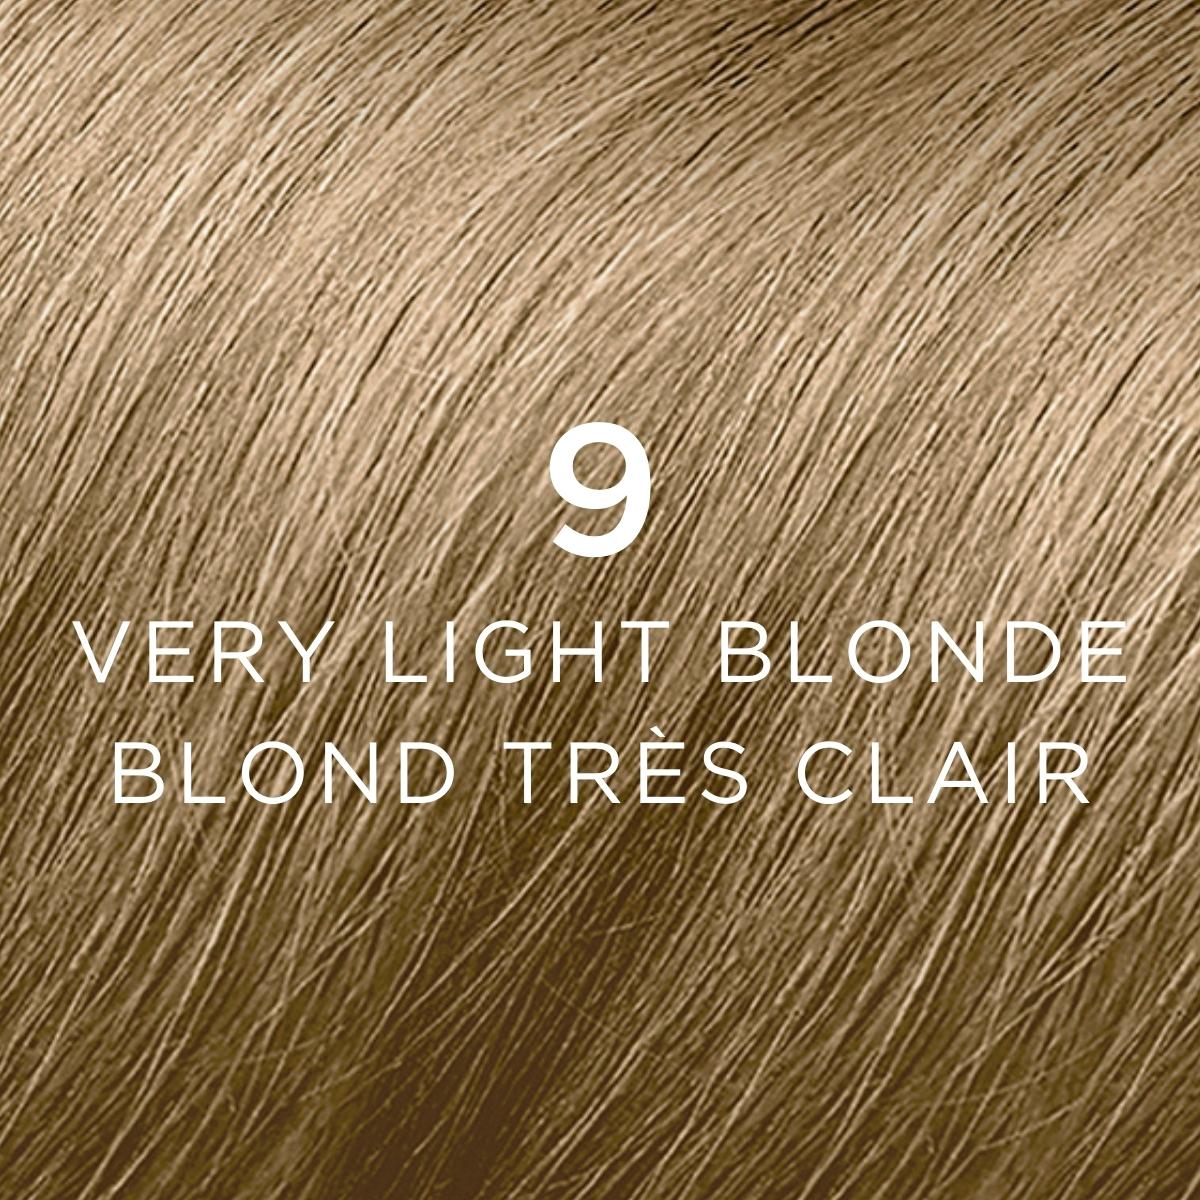 9 Blond très clair